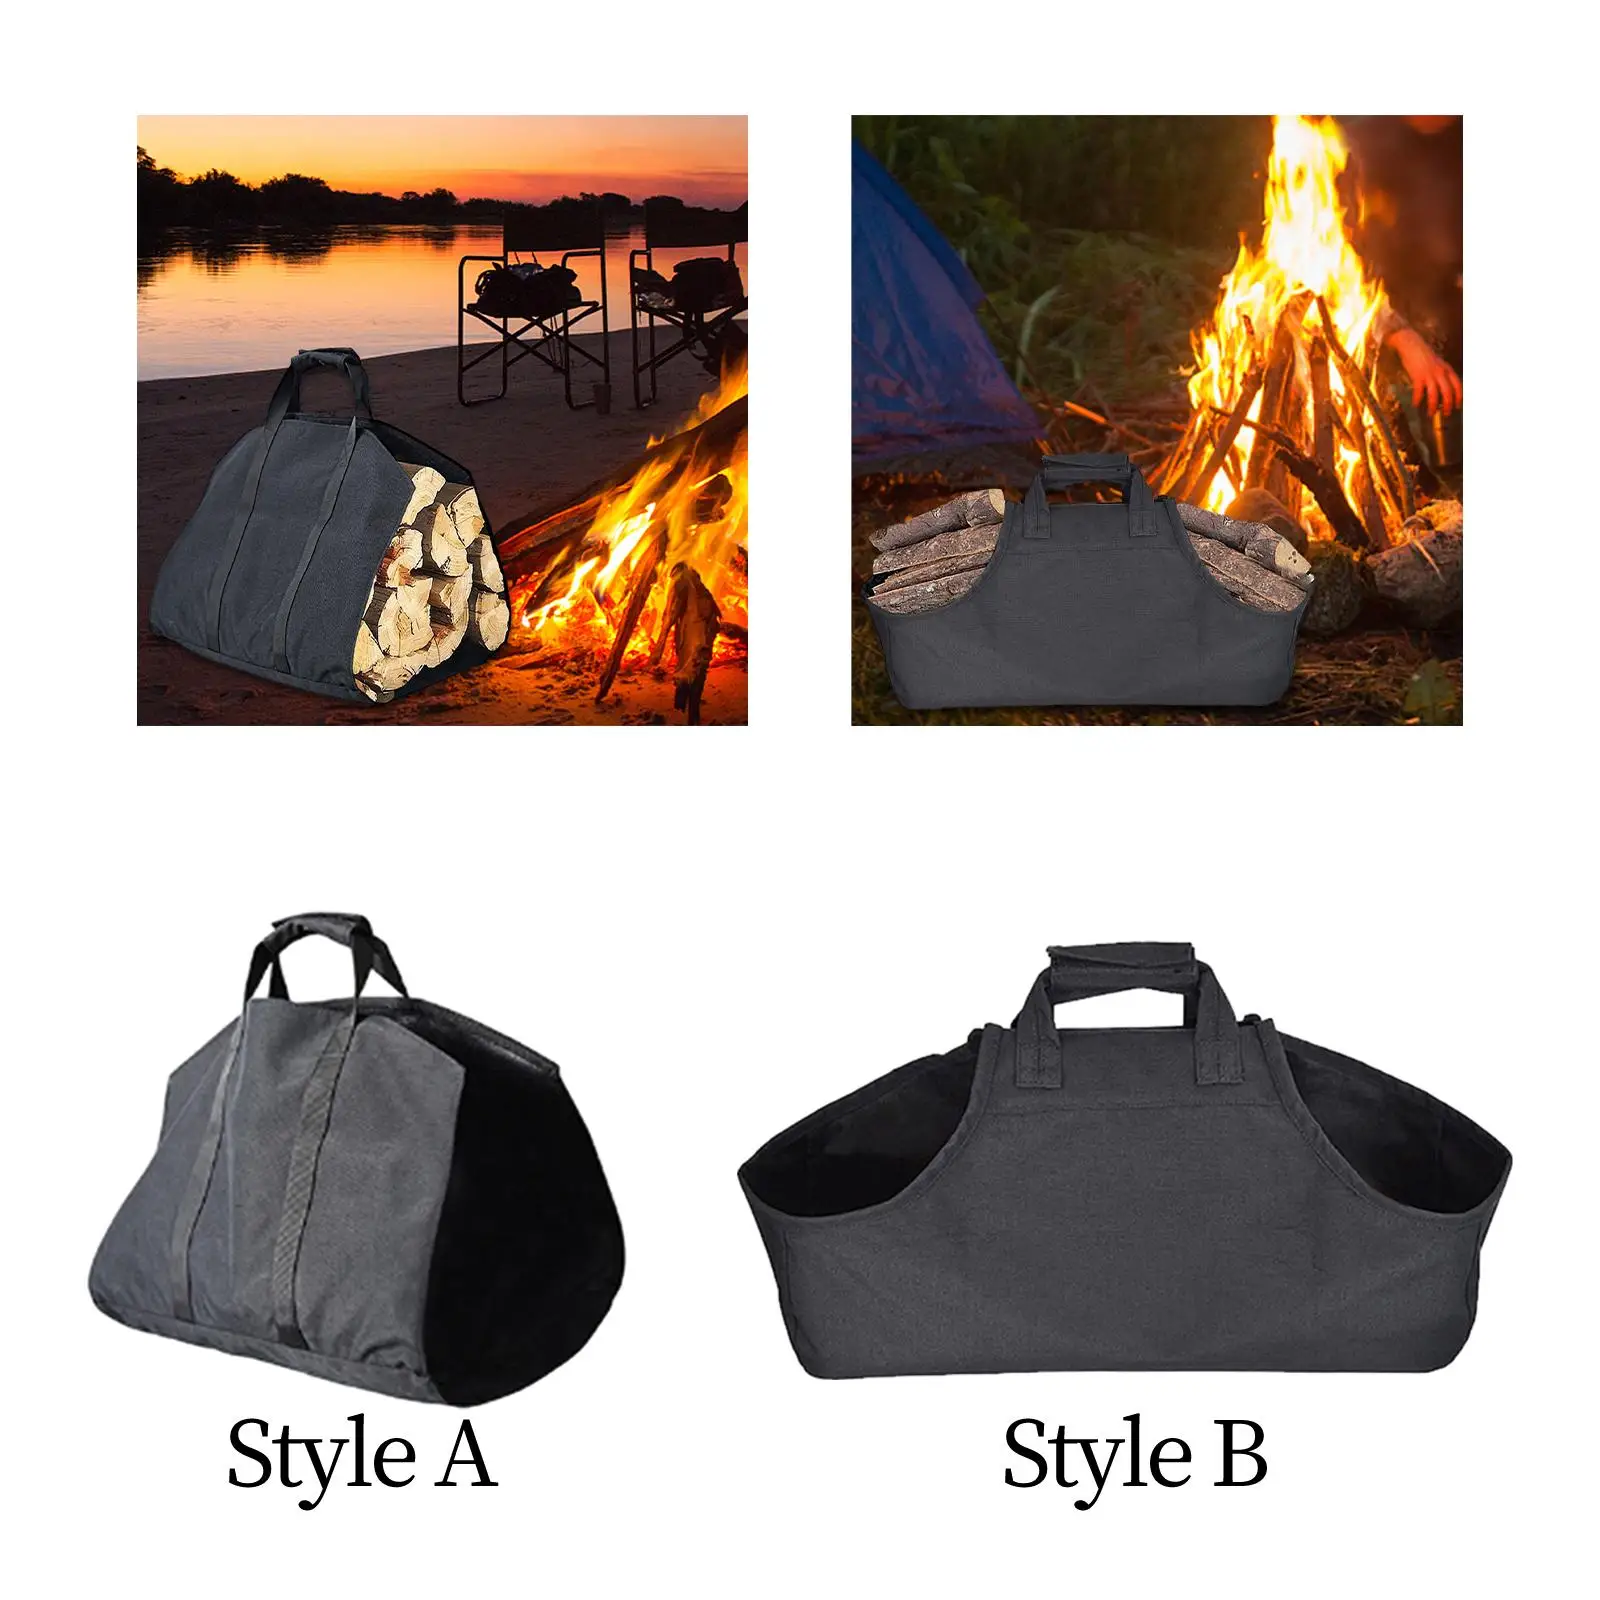 Large Fire Tote Bag Black Firewood Carrier Bag for Picnics Home Outdoor